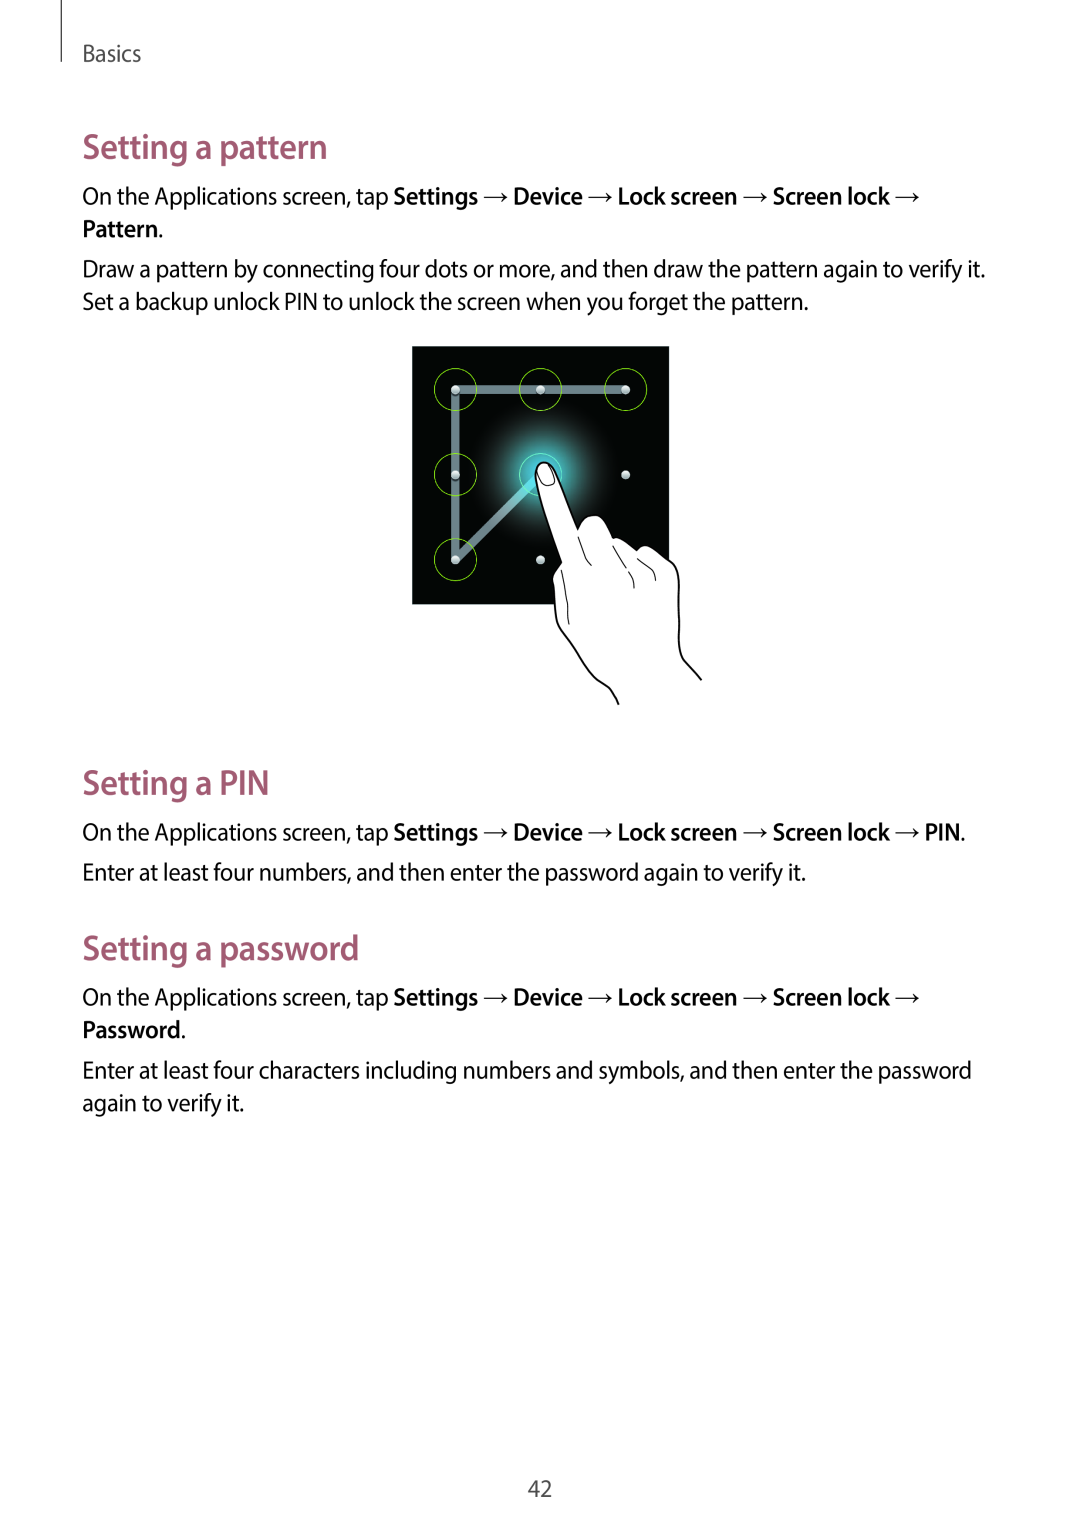 Samsung SM-G7105ZKAILO, SM-G7105ZKAATO, SM-G7105ZWAATO manual Setting a pattern, Setting a PIN, Setting a password, Basics 